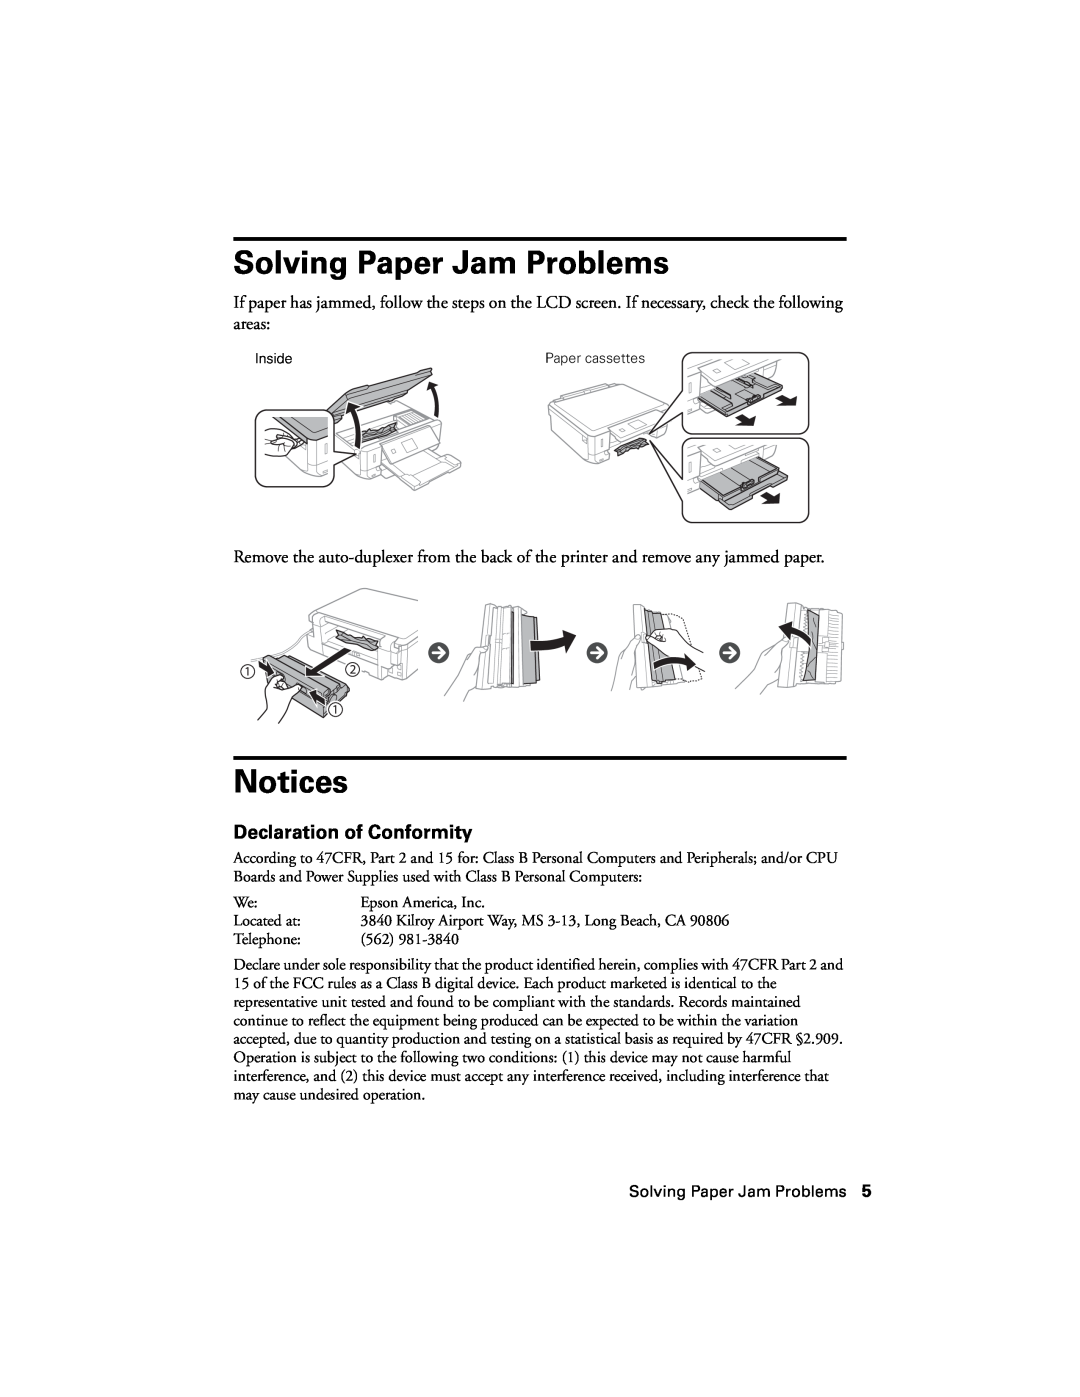 Epson XP-620 manual Solving Paper Jam Problems, Notices, Declaration of Conformity 